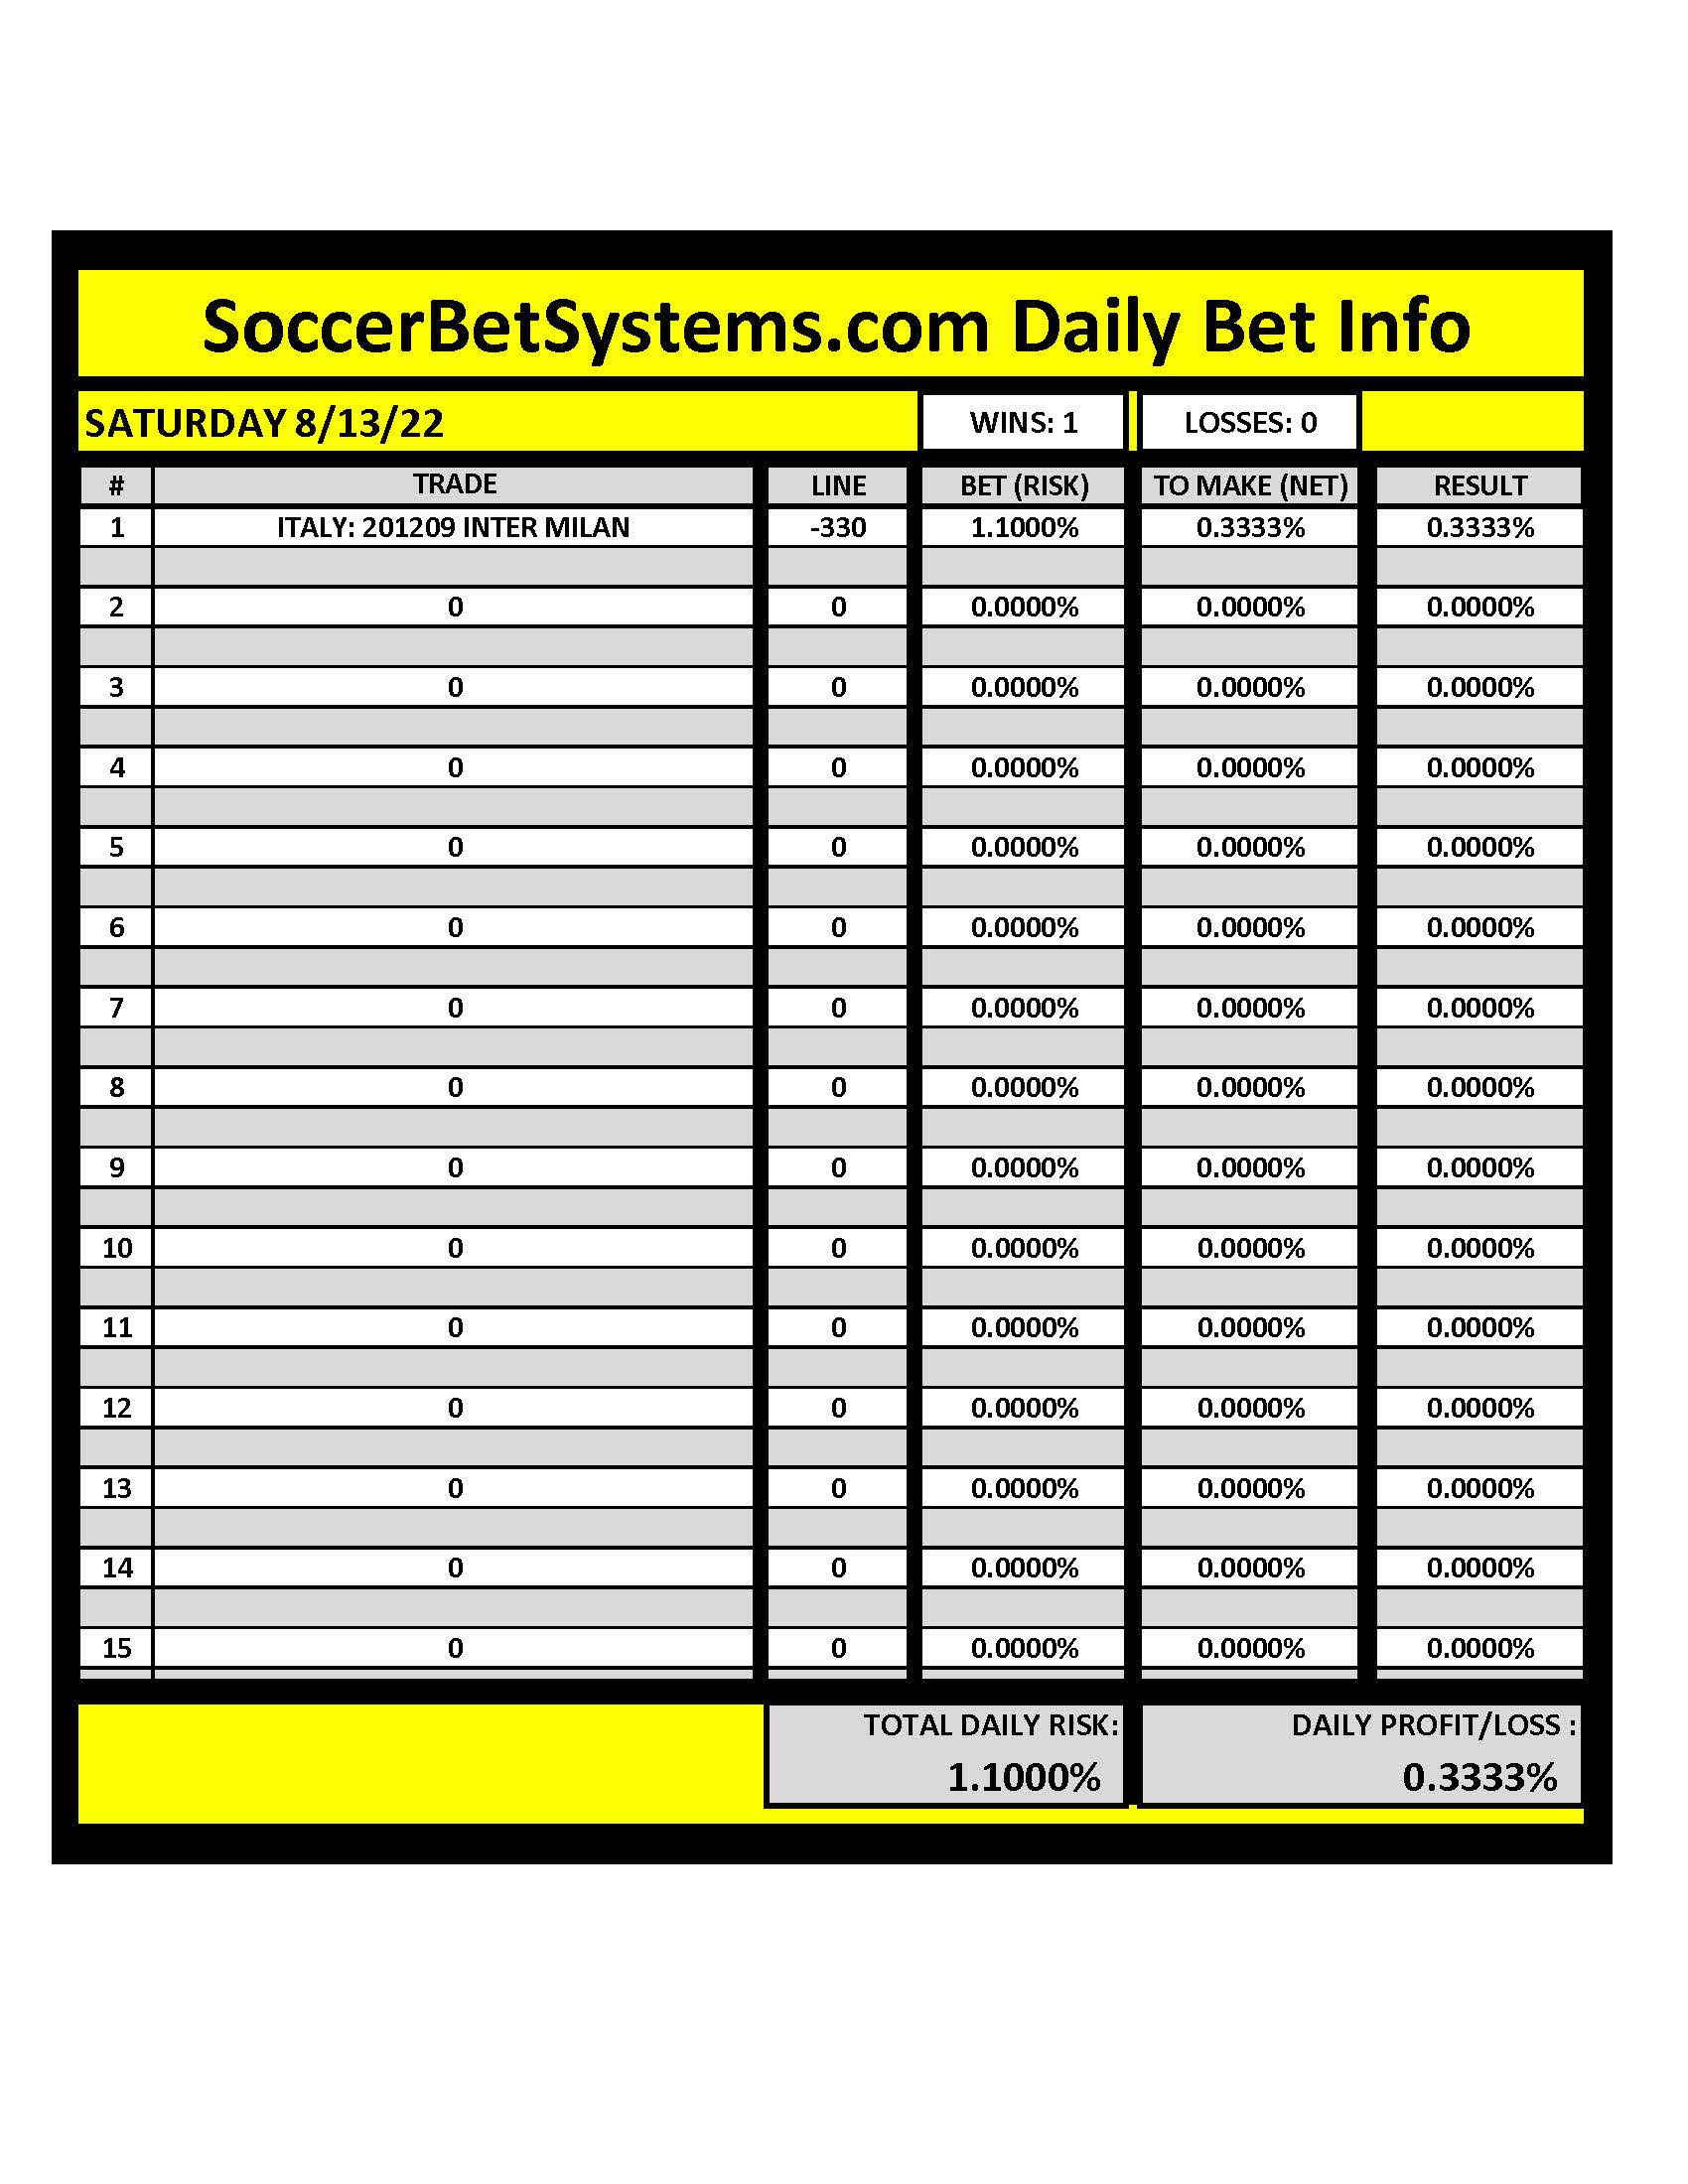 SoccerBetSystems.com 8/13/22 Daily Results